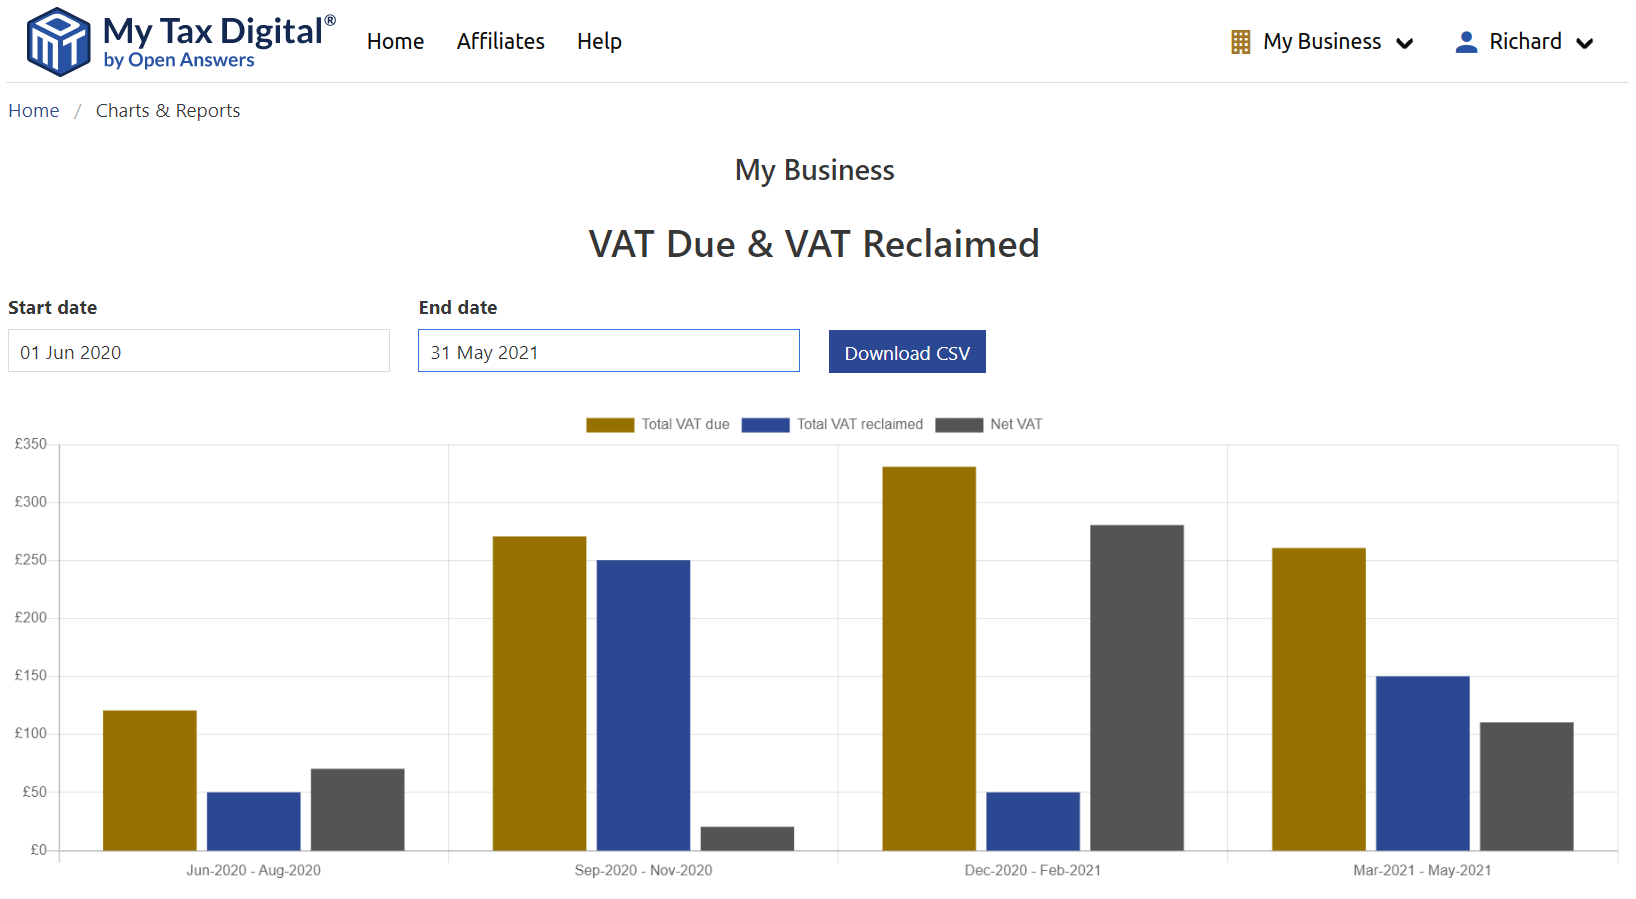 My Tax Digital Total VAT Due & Total VAT Reclaimed bar chart